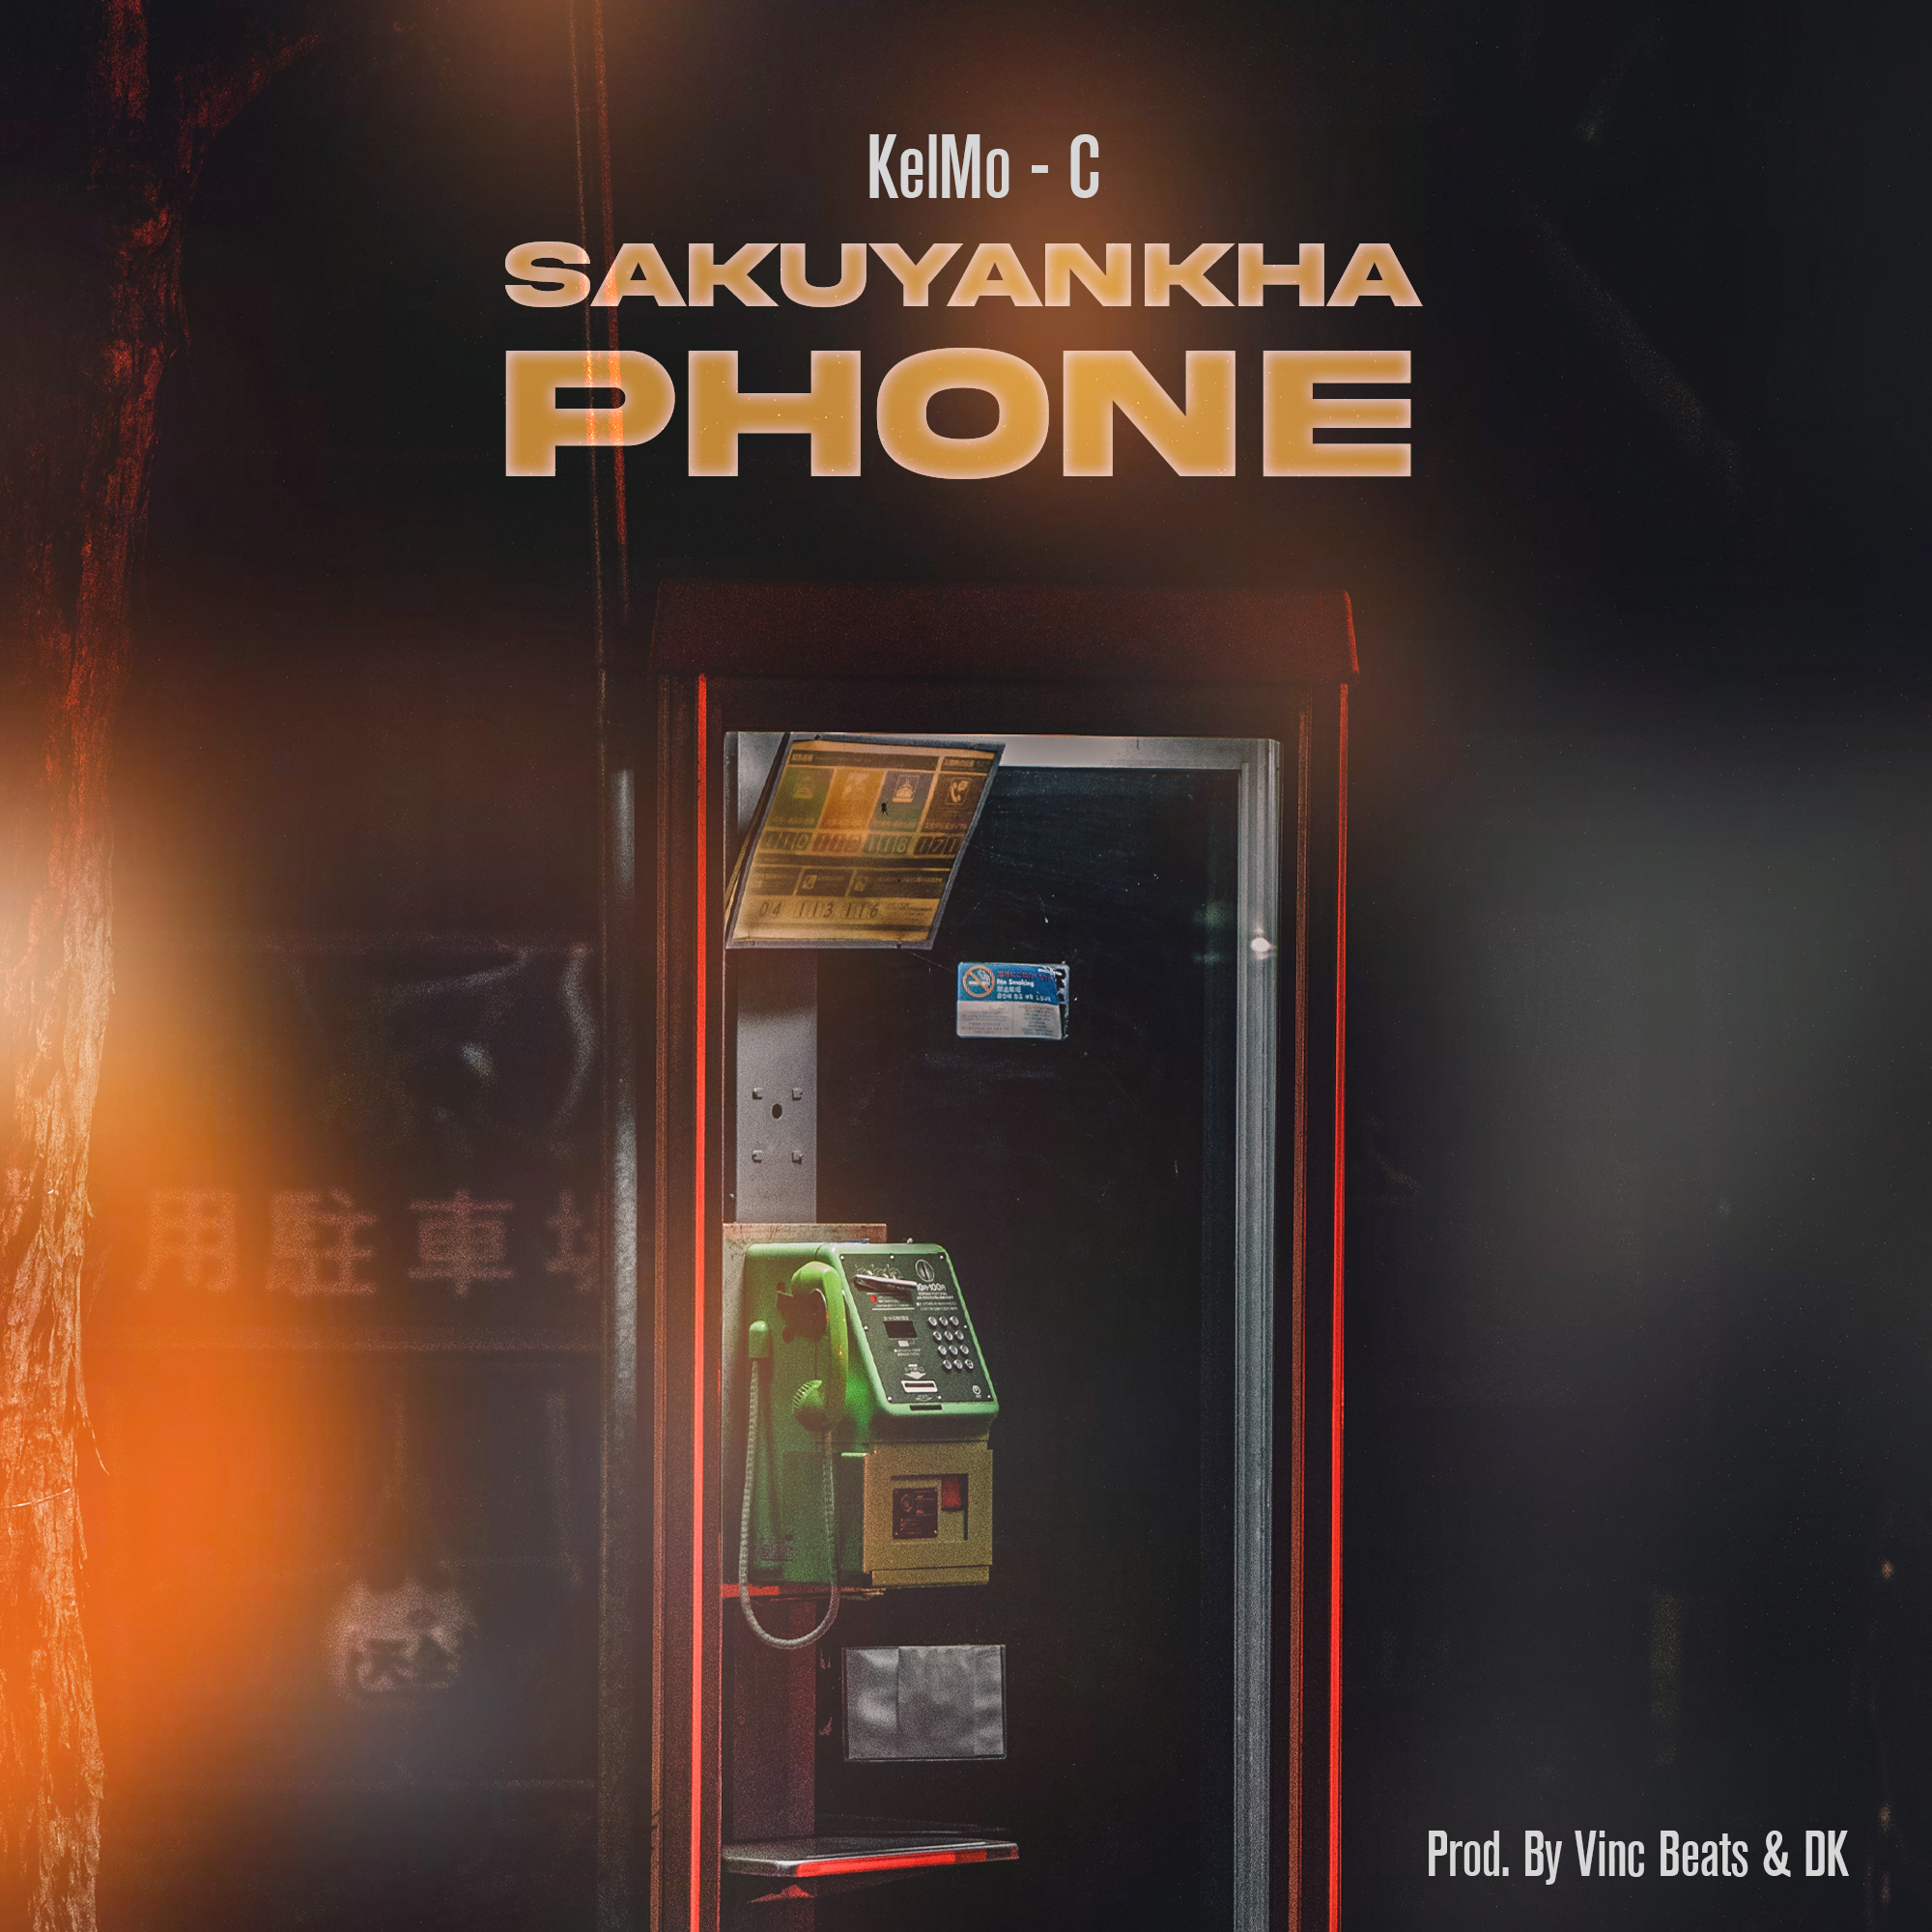 Sakuyankha Phone